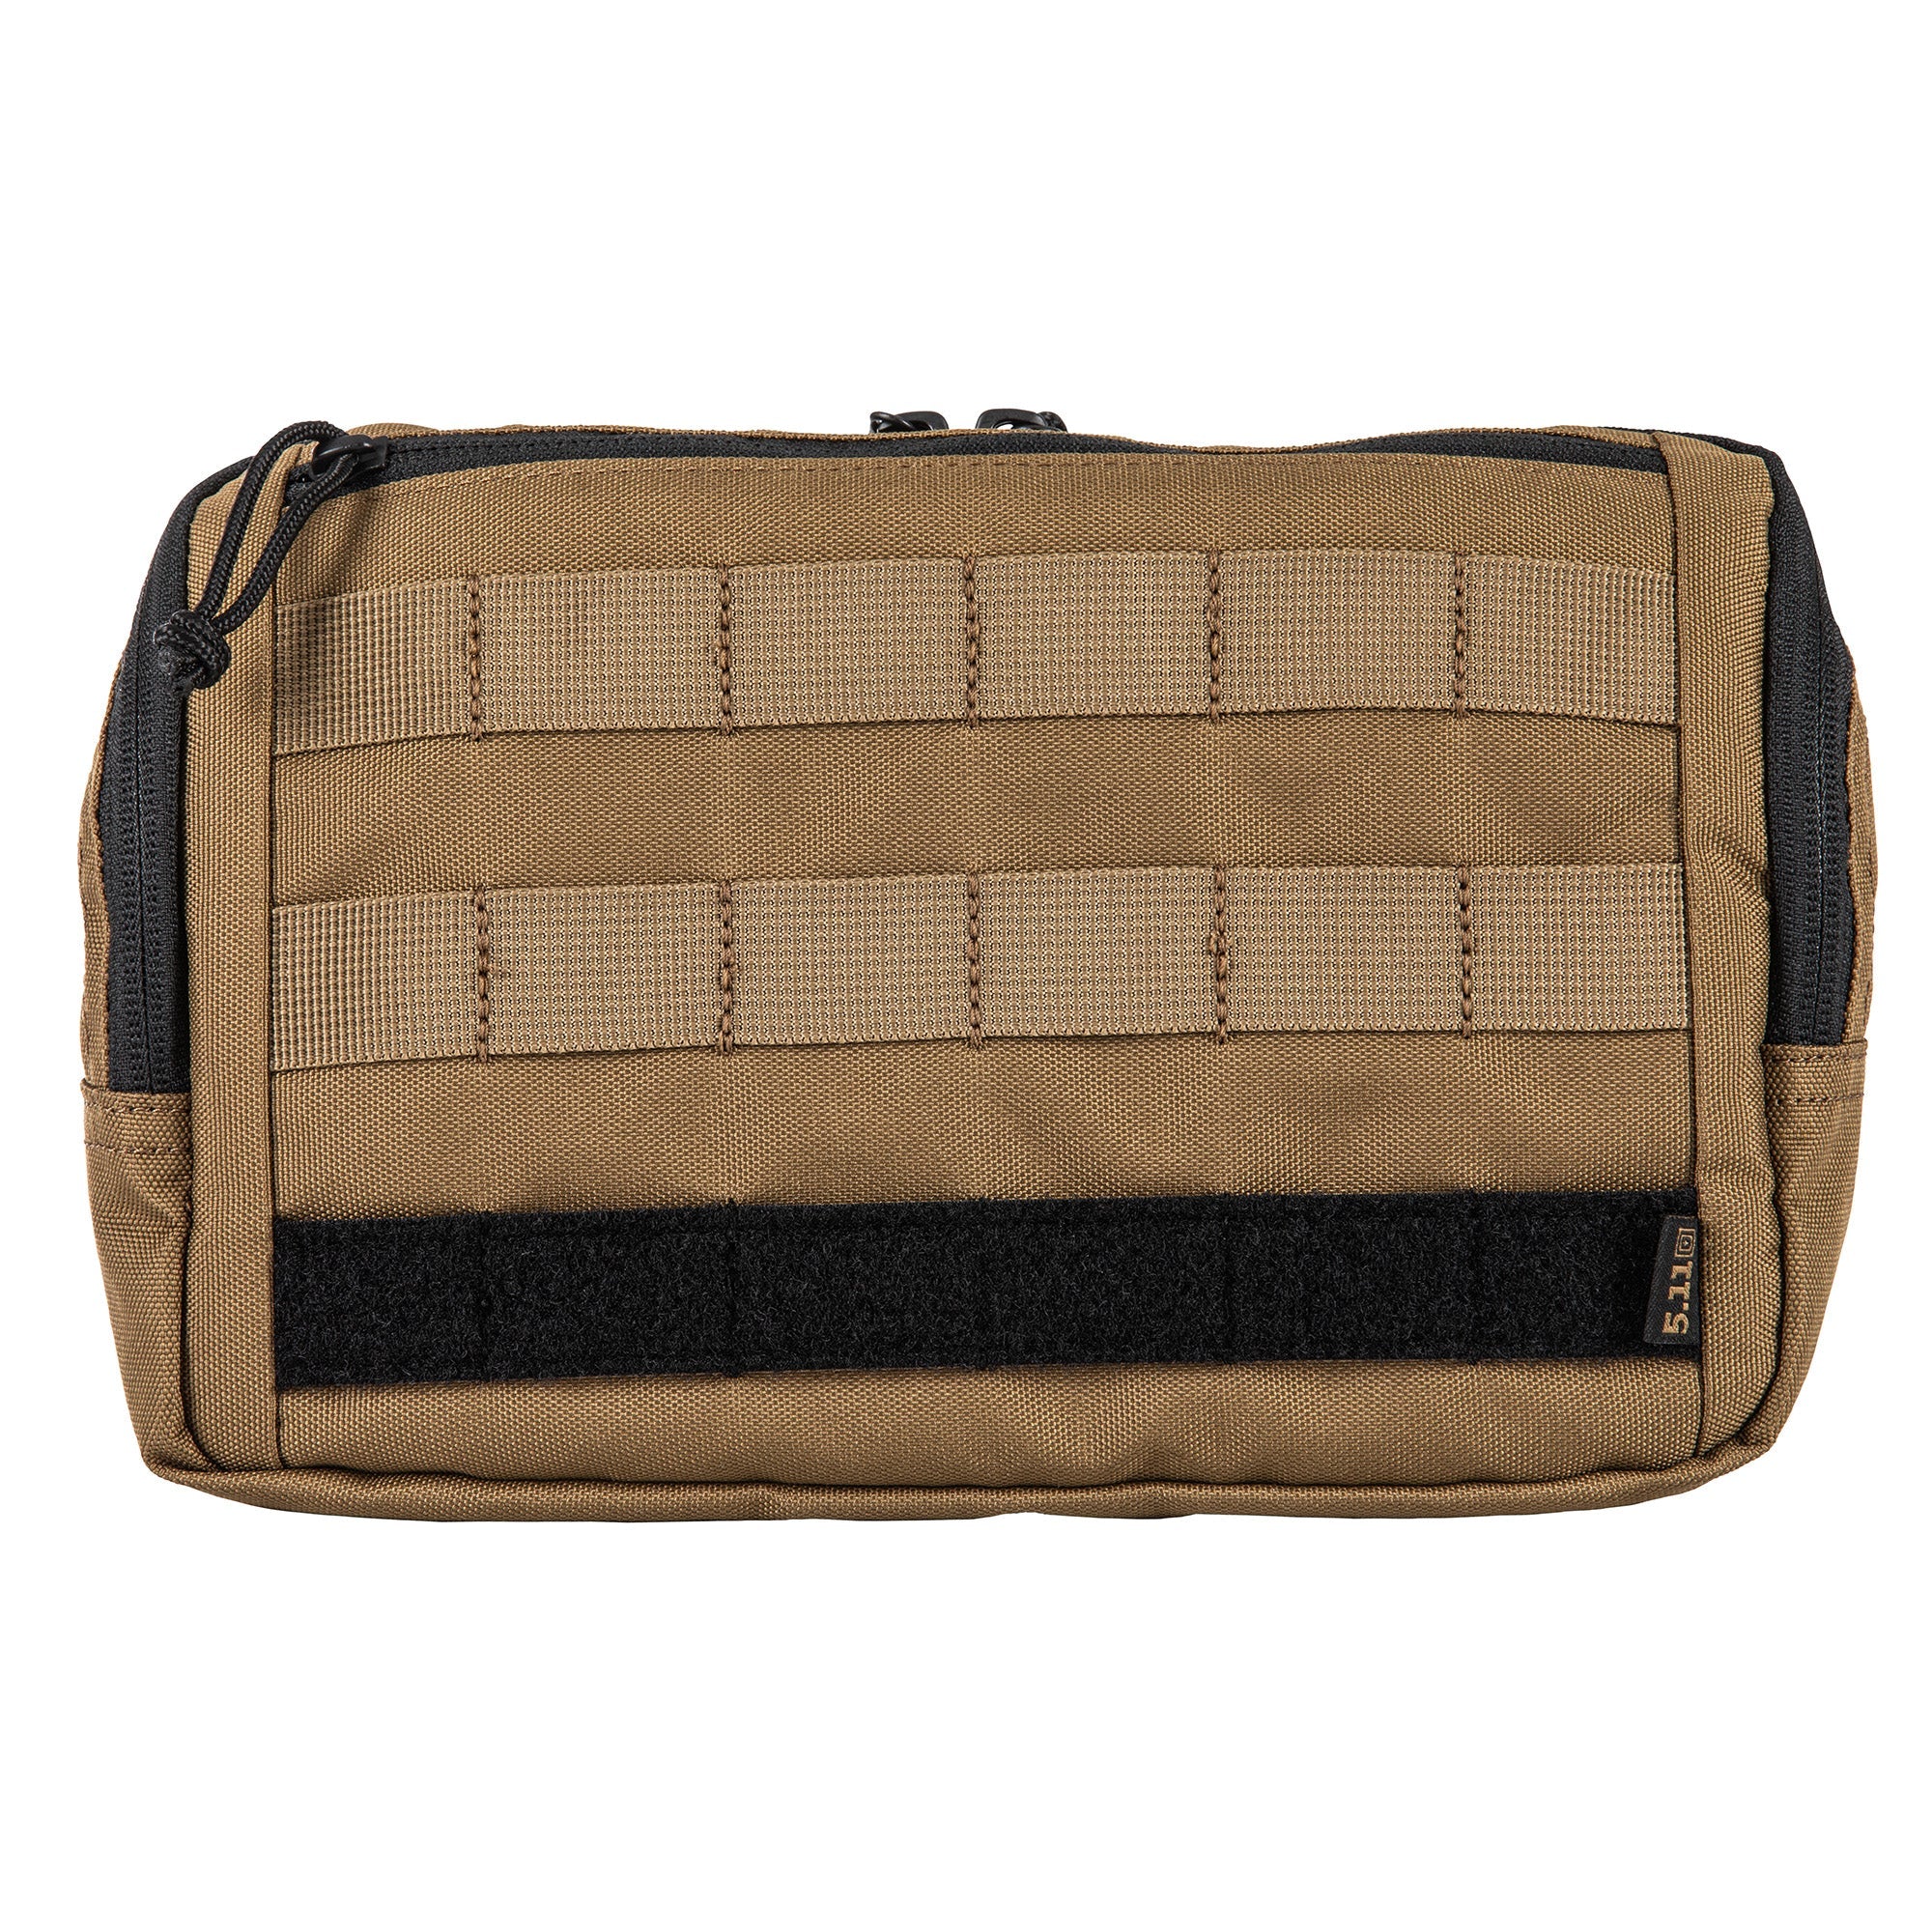 5.11 Tactical Rush 72 Backpack Tactical Gear Australia Tactical Gear